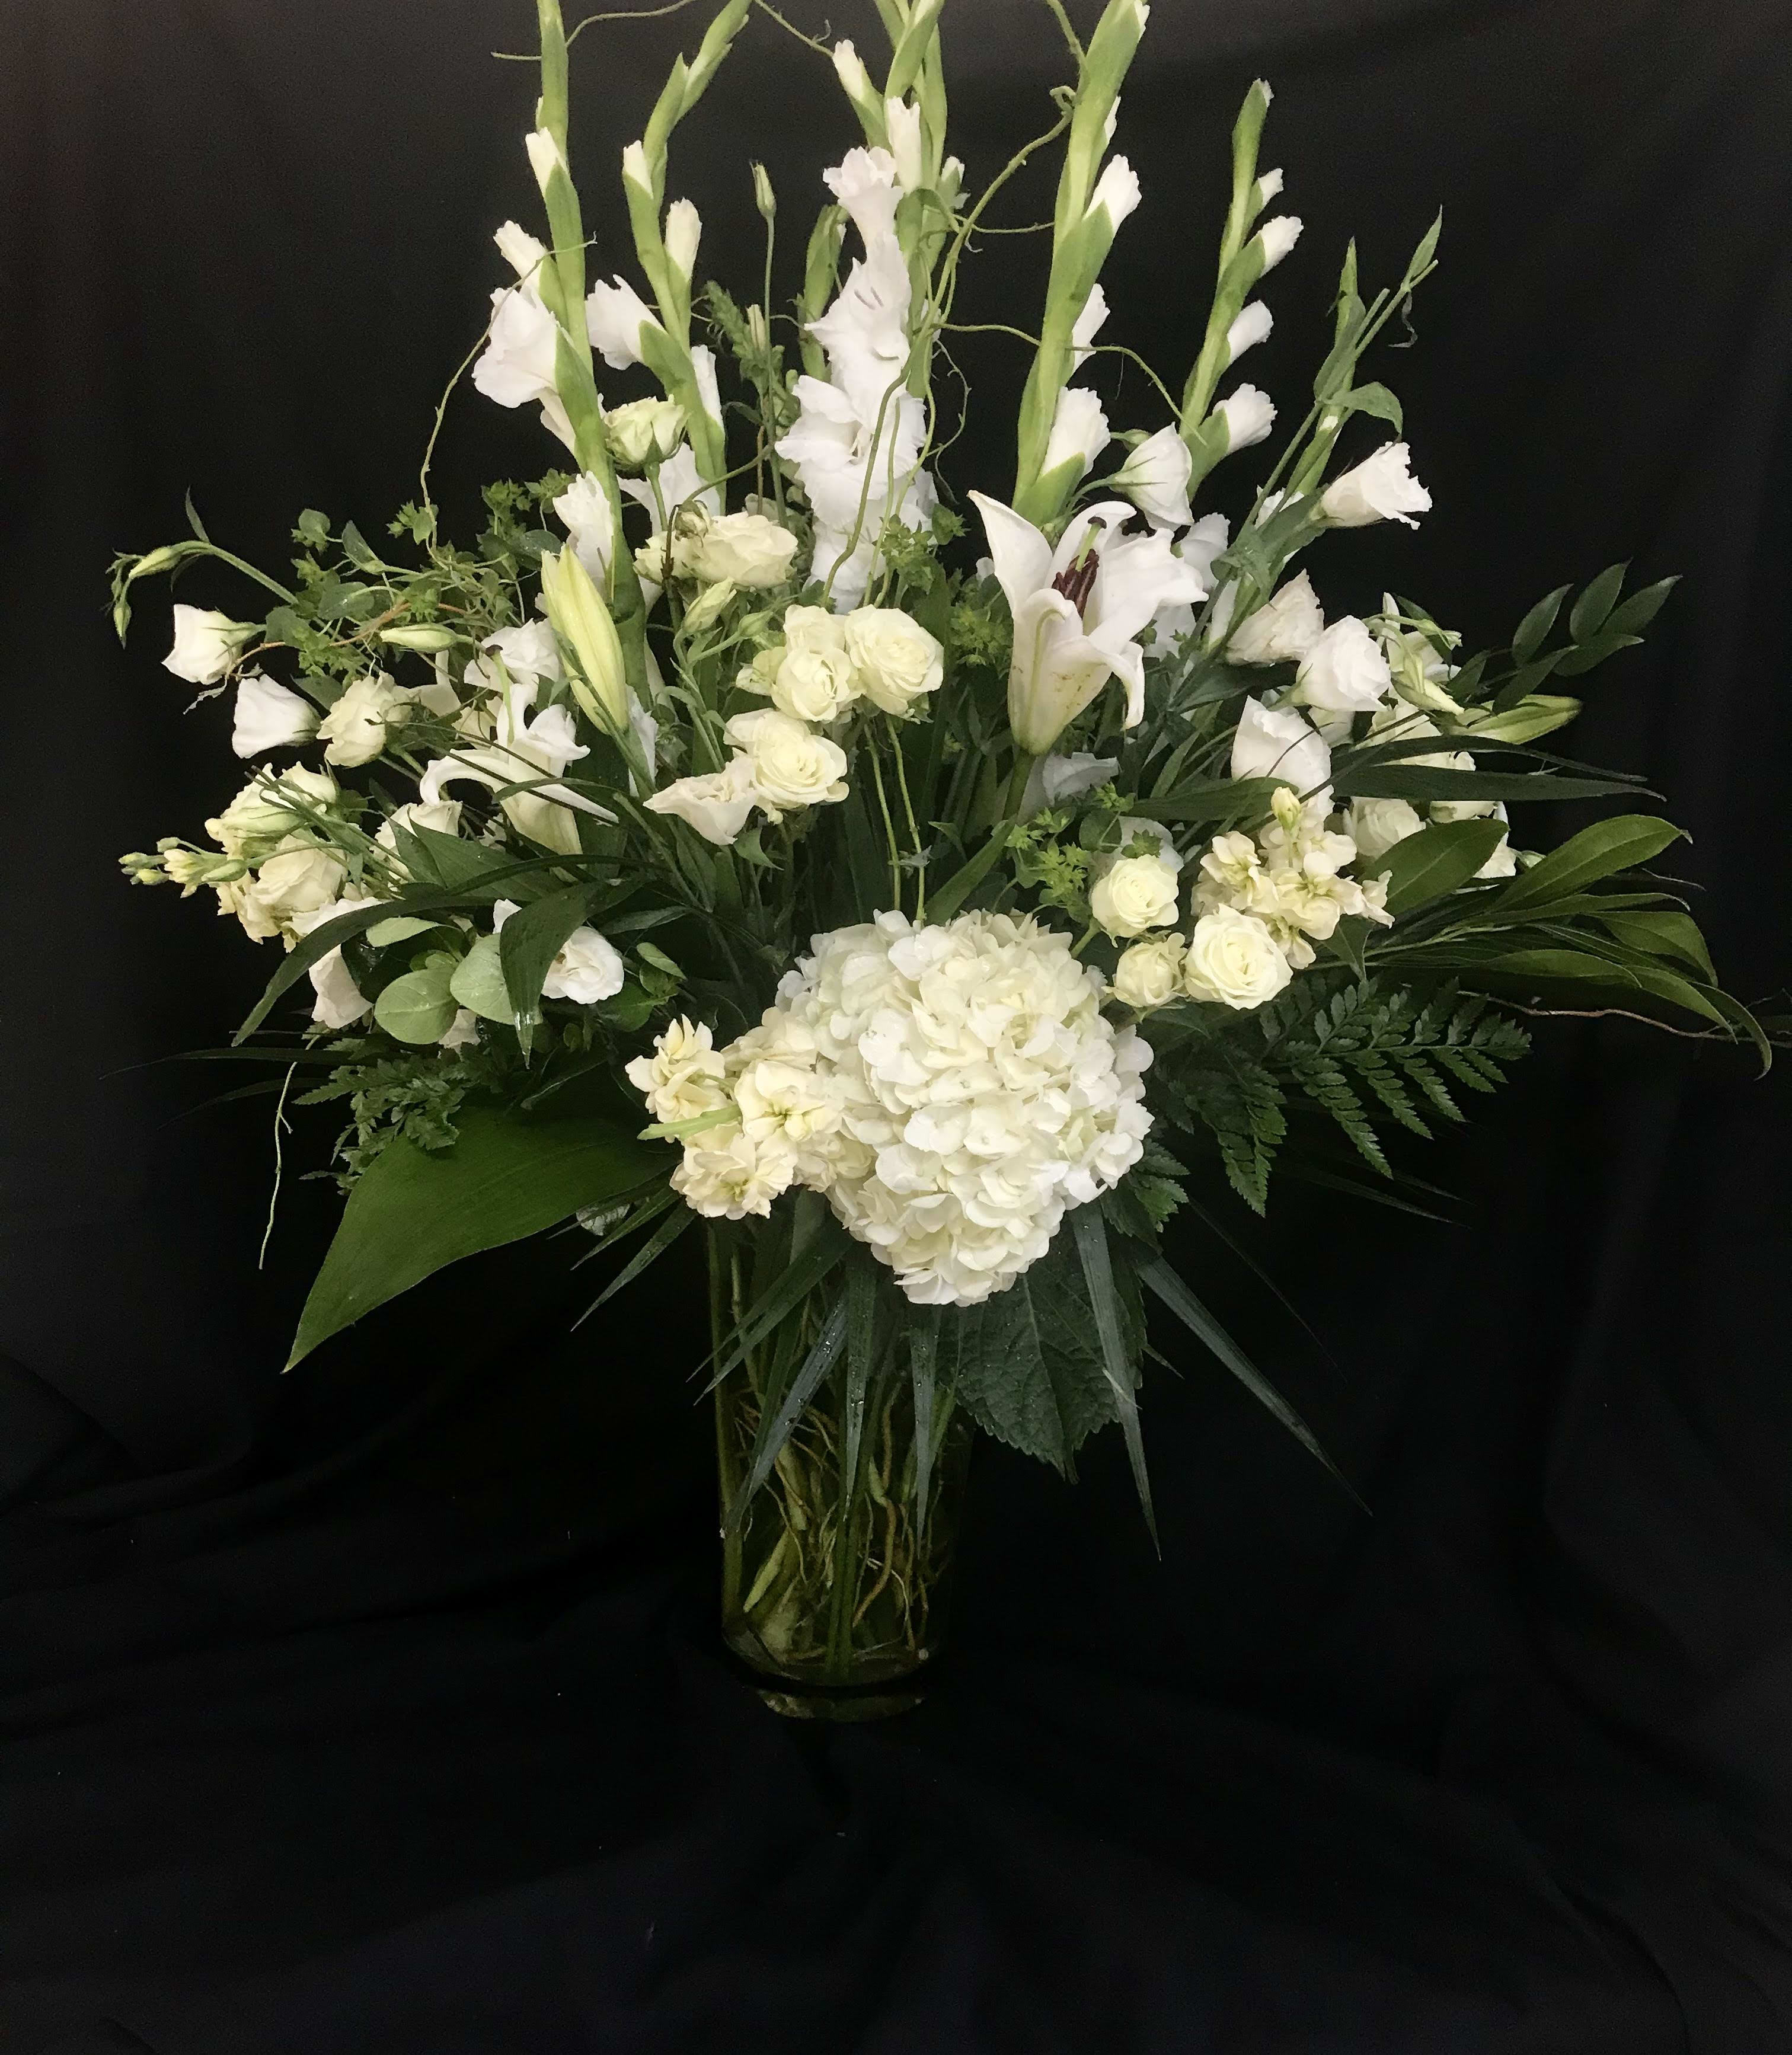 All White Elegance Vase - A beautiful all white sympathy vase